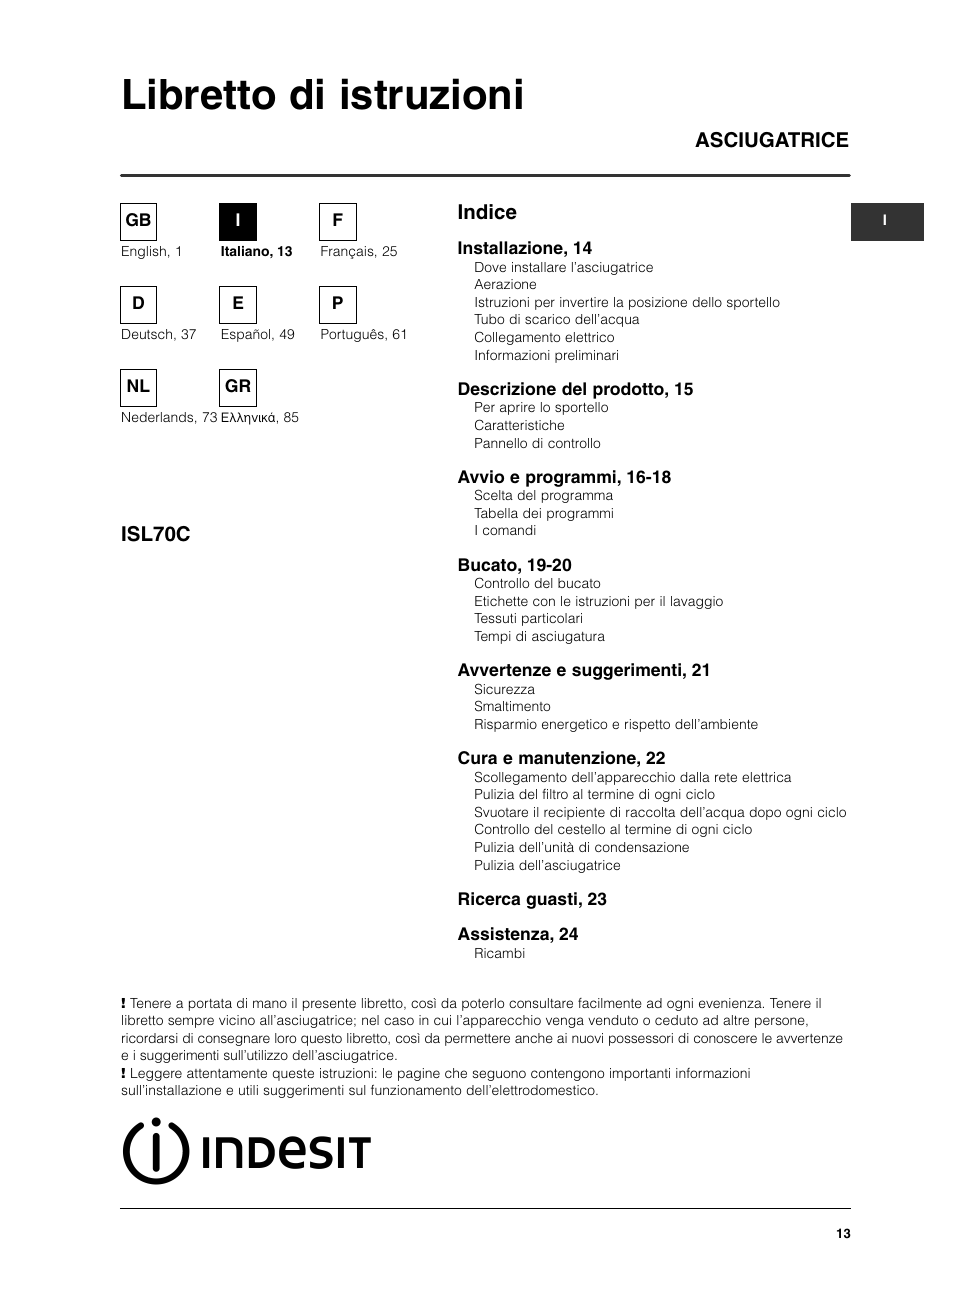 Libretto di istruzioni, Indice asciugatrice isl70c | Indesit ISL 70 C User  Manual | Page 13 / 96 | Original mode